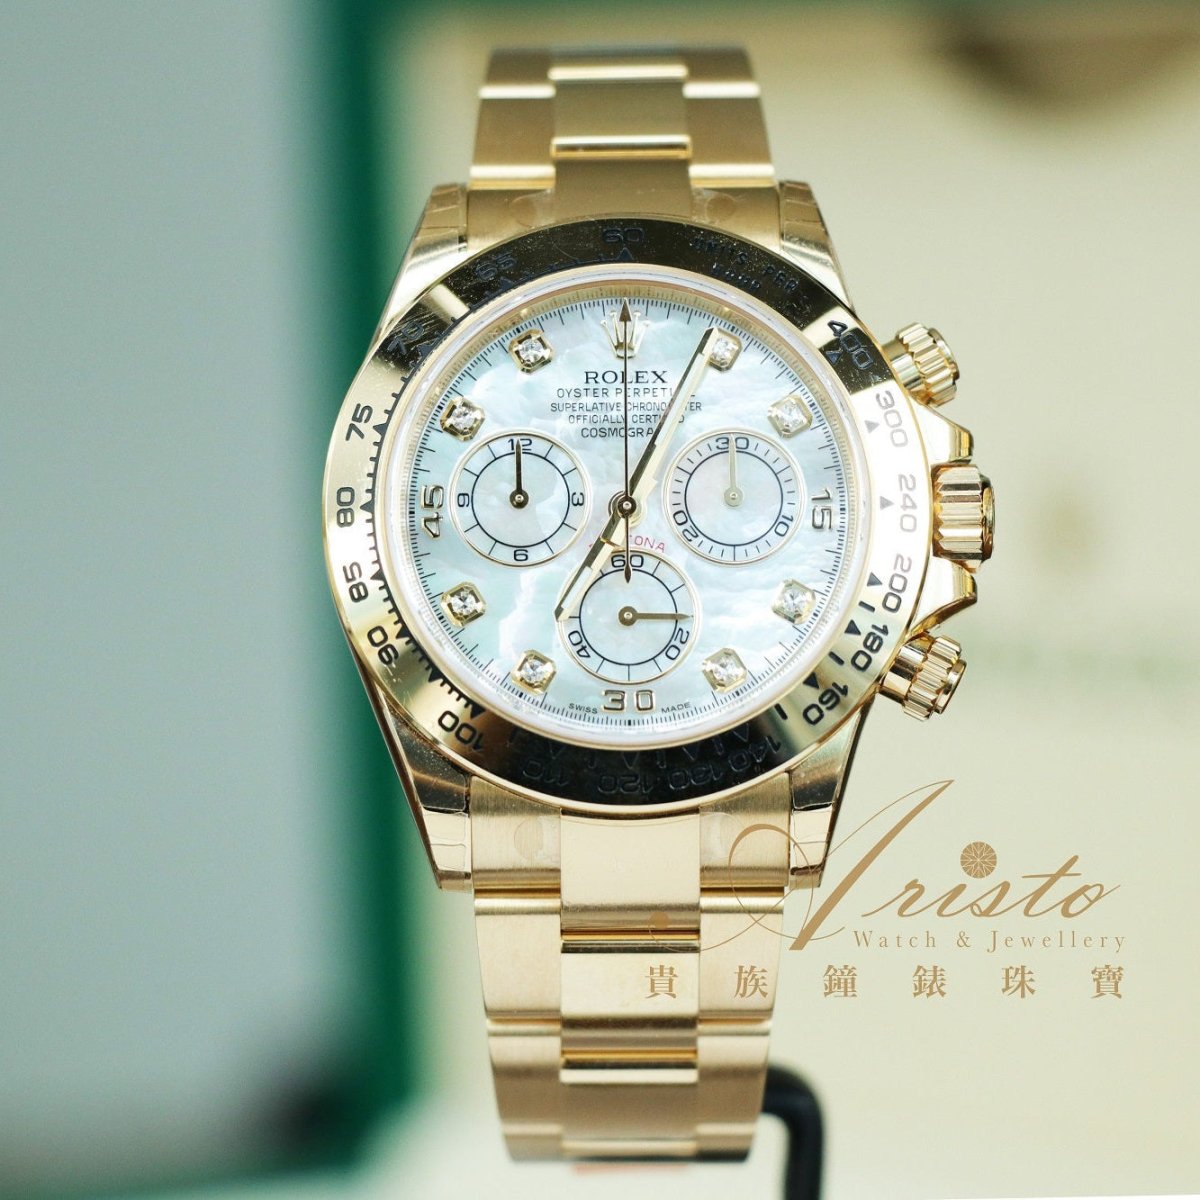 Rolex 116508NG White Daytona- Aristo Watch & Jewellery